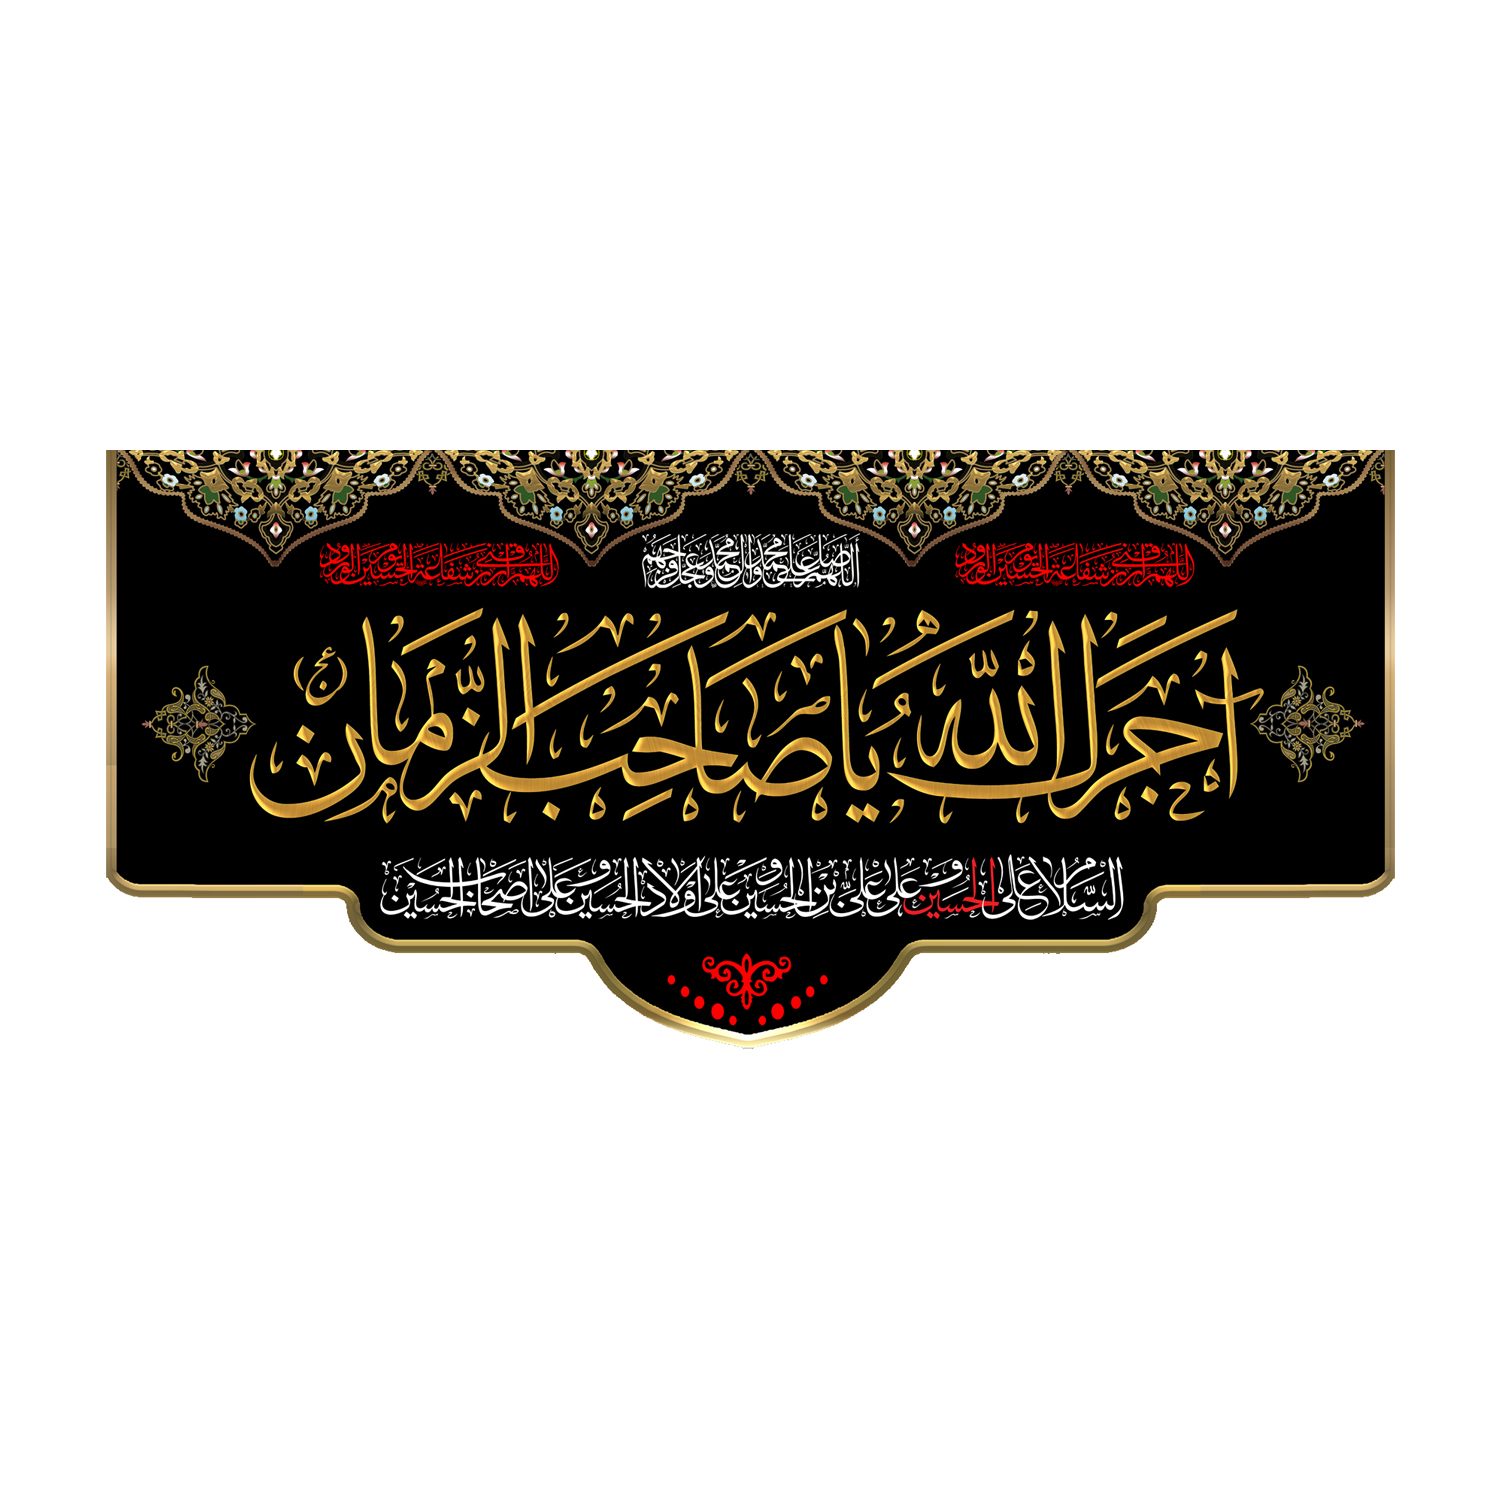 پرچم مدل آجرک الله یا صاحب الزمان کد 500080-140300